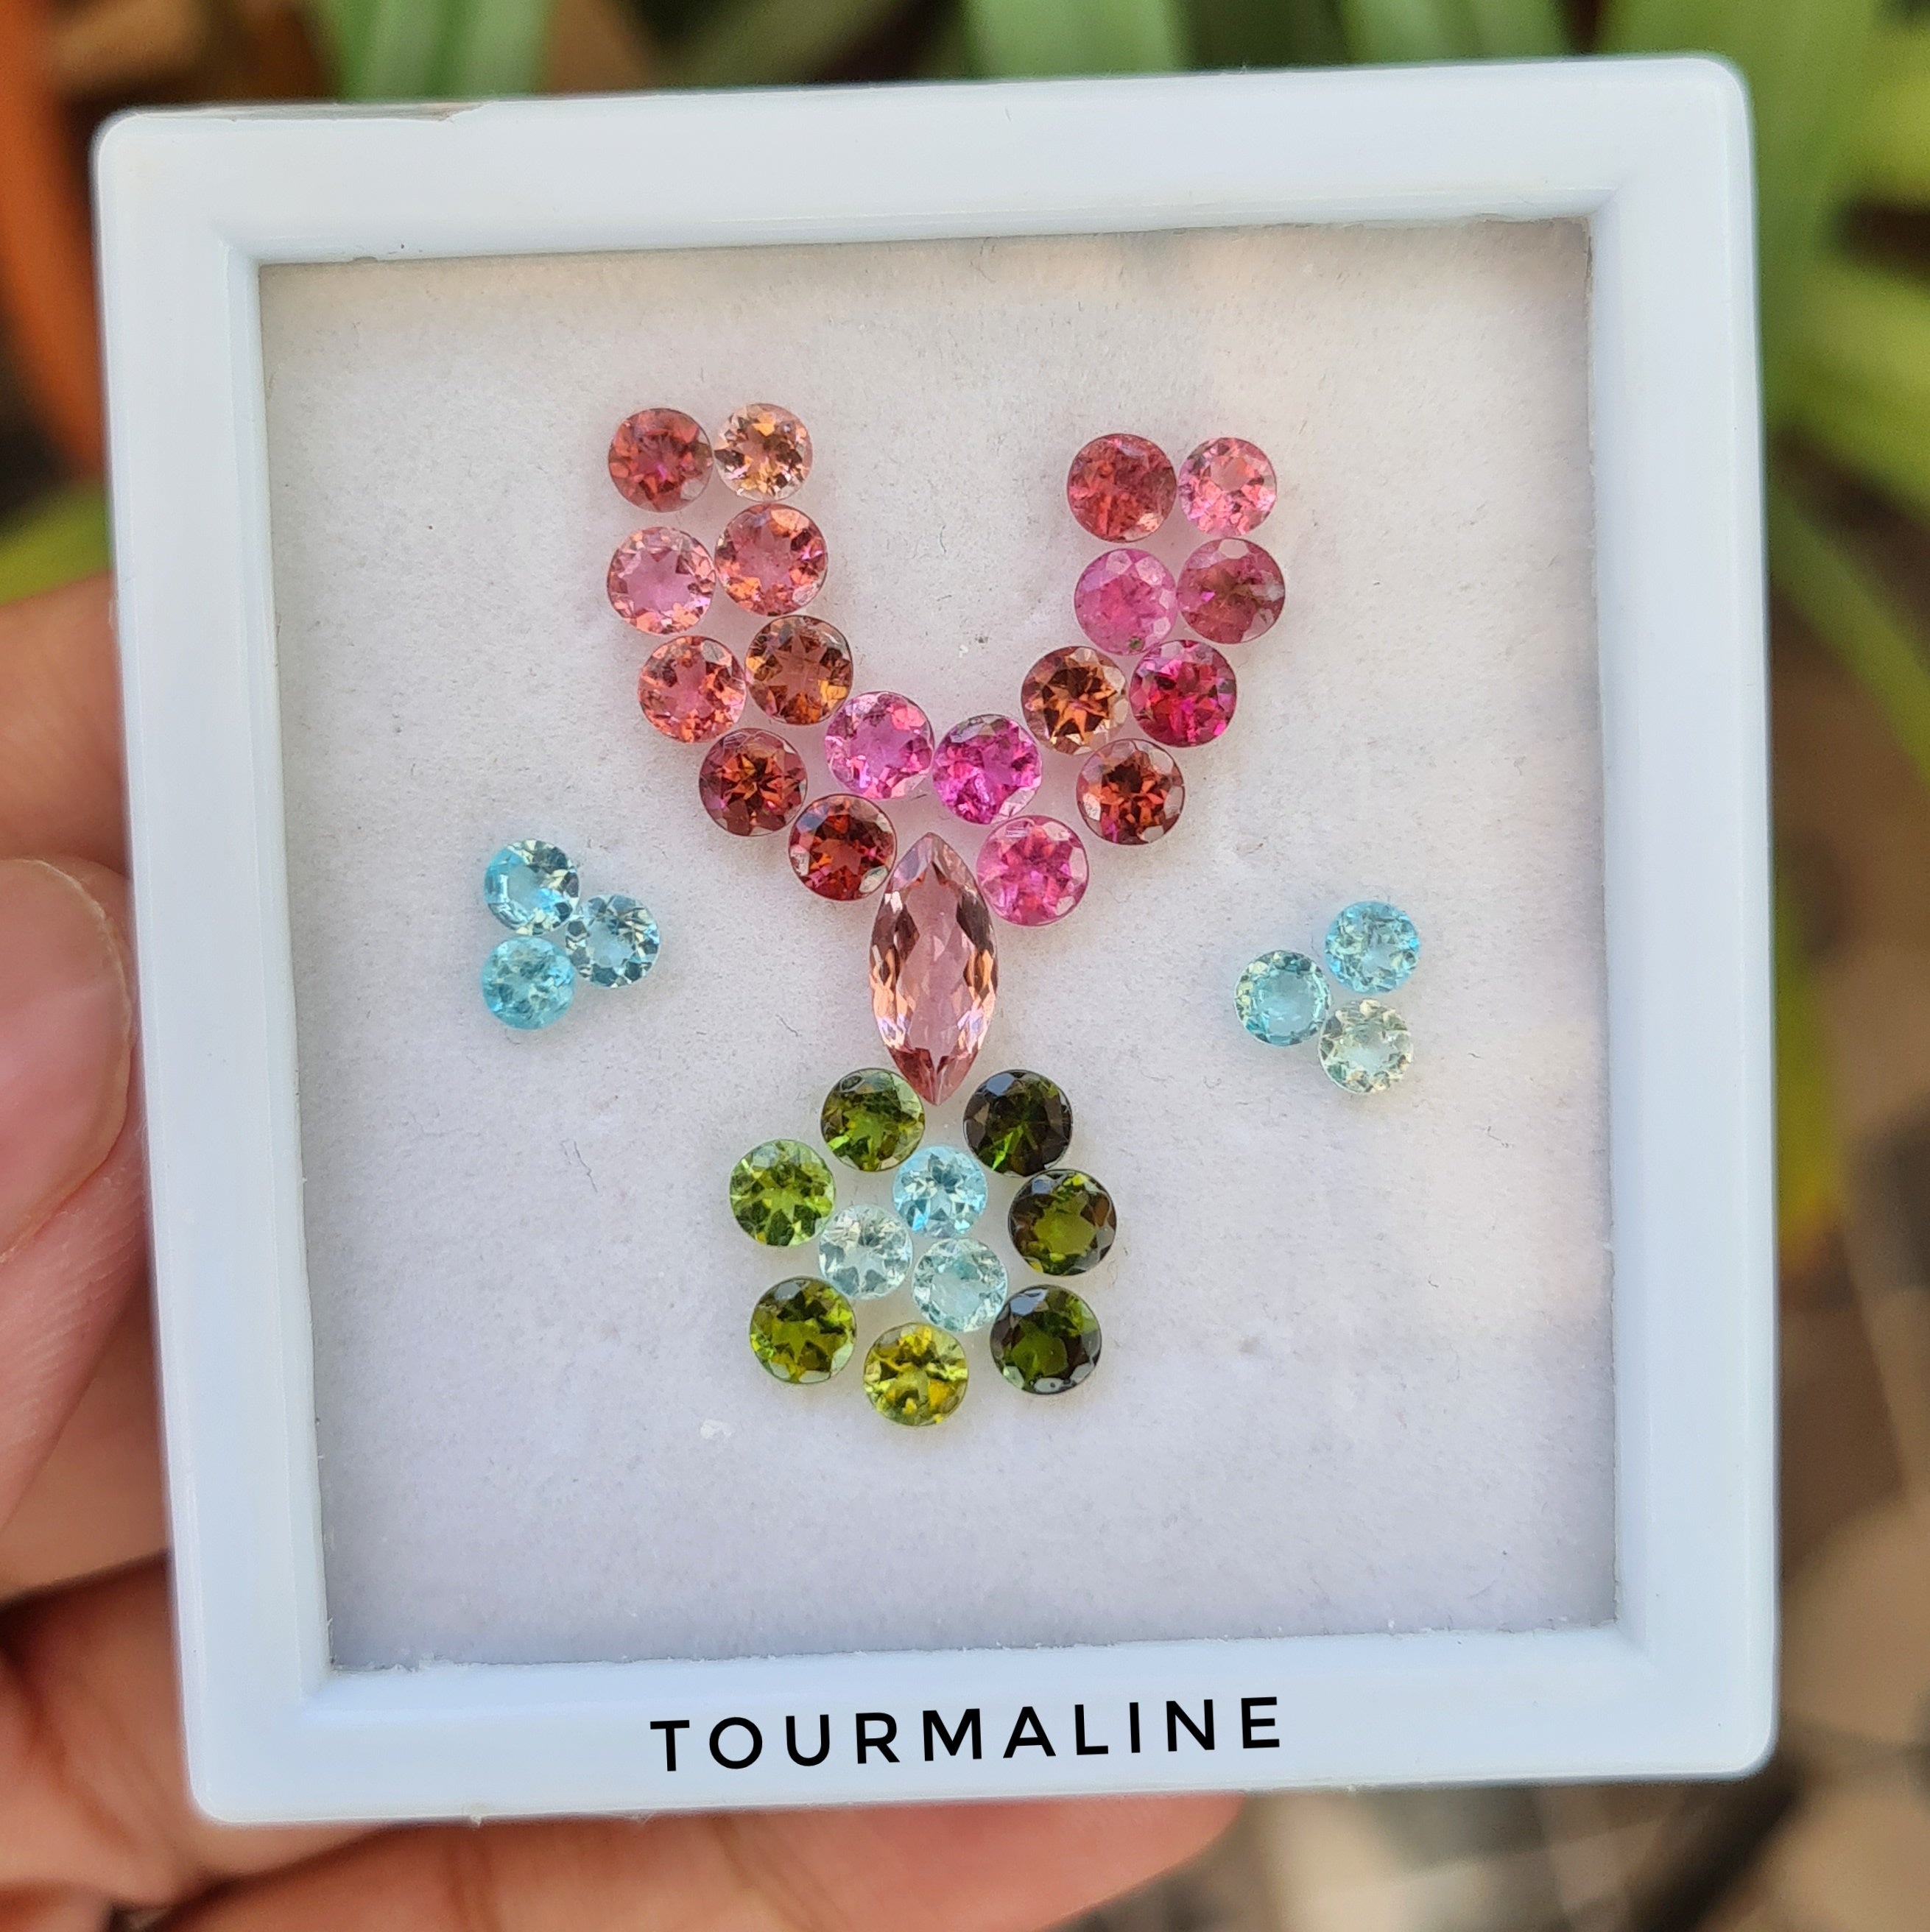 35 Pieces Natural Tourmaline Gemstone Mix Shape Size 3-10mm - The LabradoriteKing